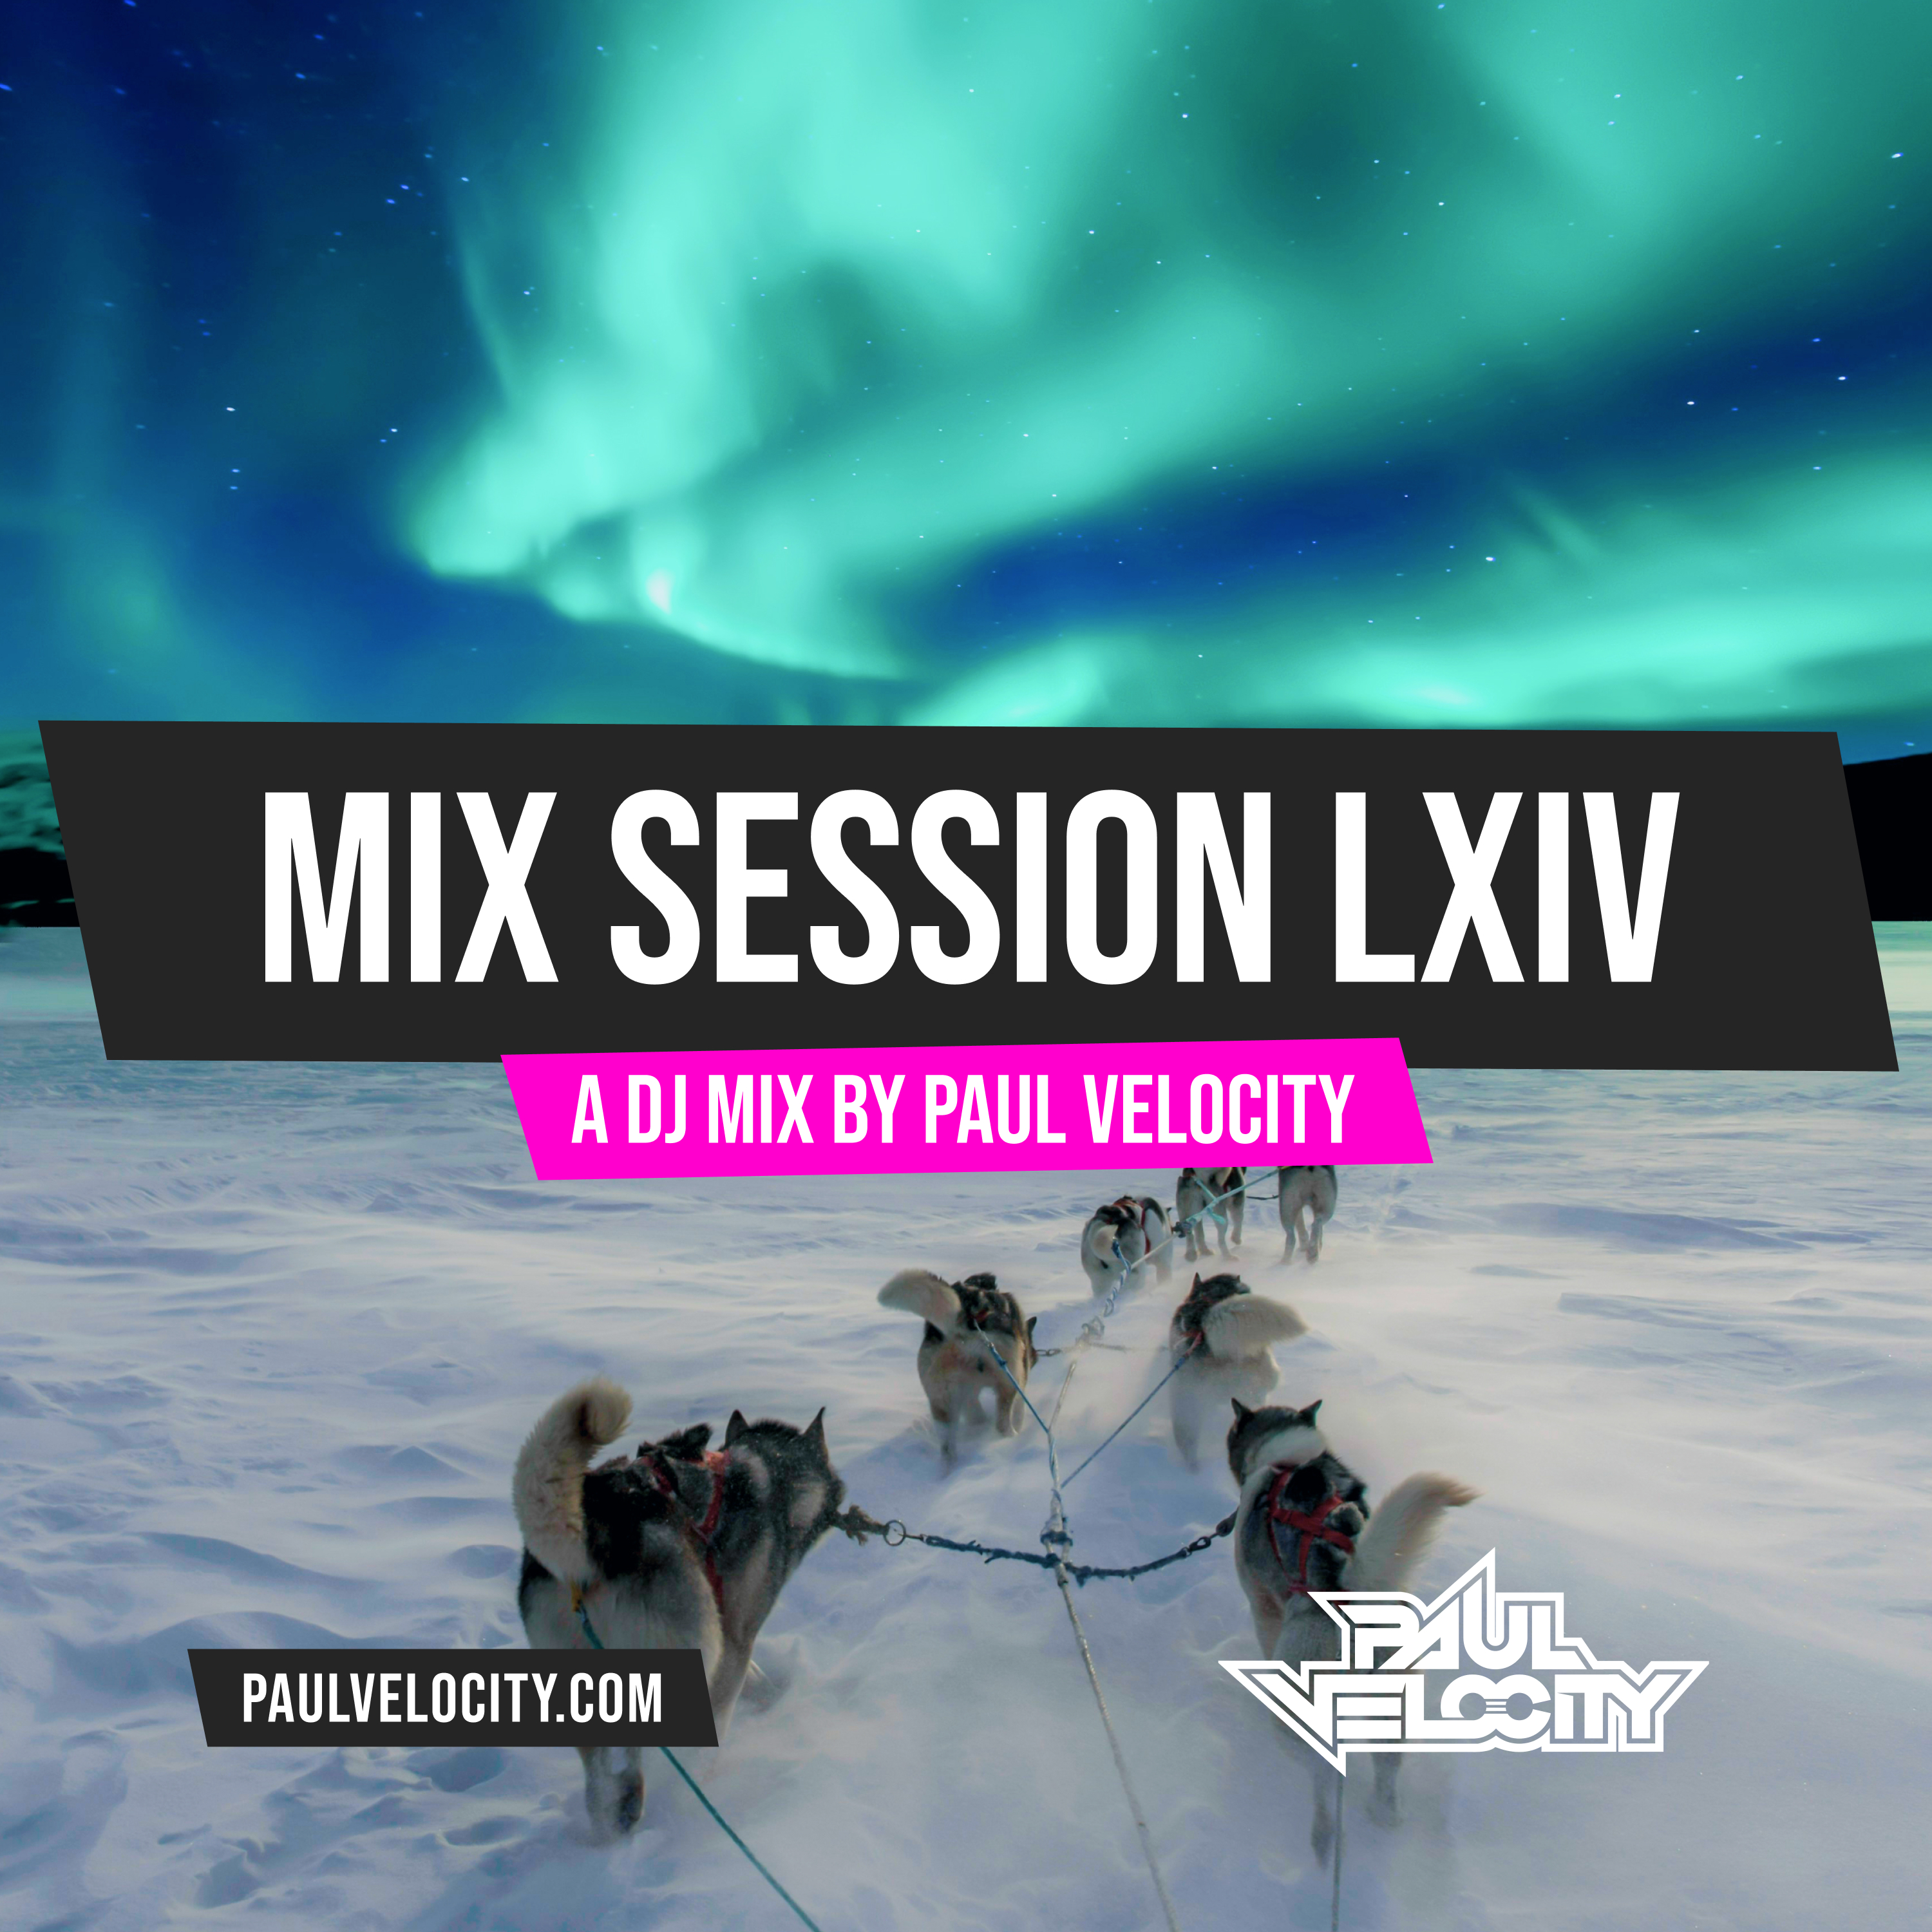 Mix Session LXIV